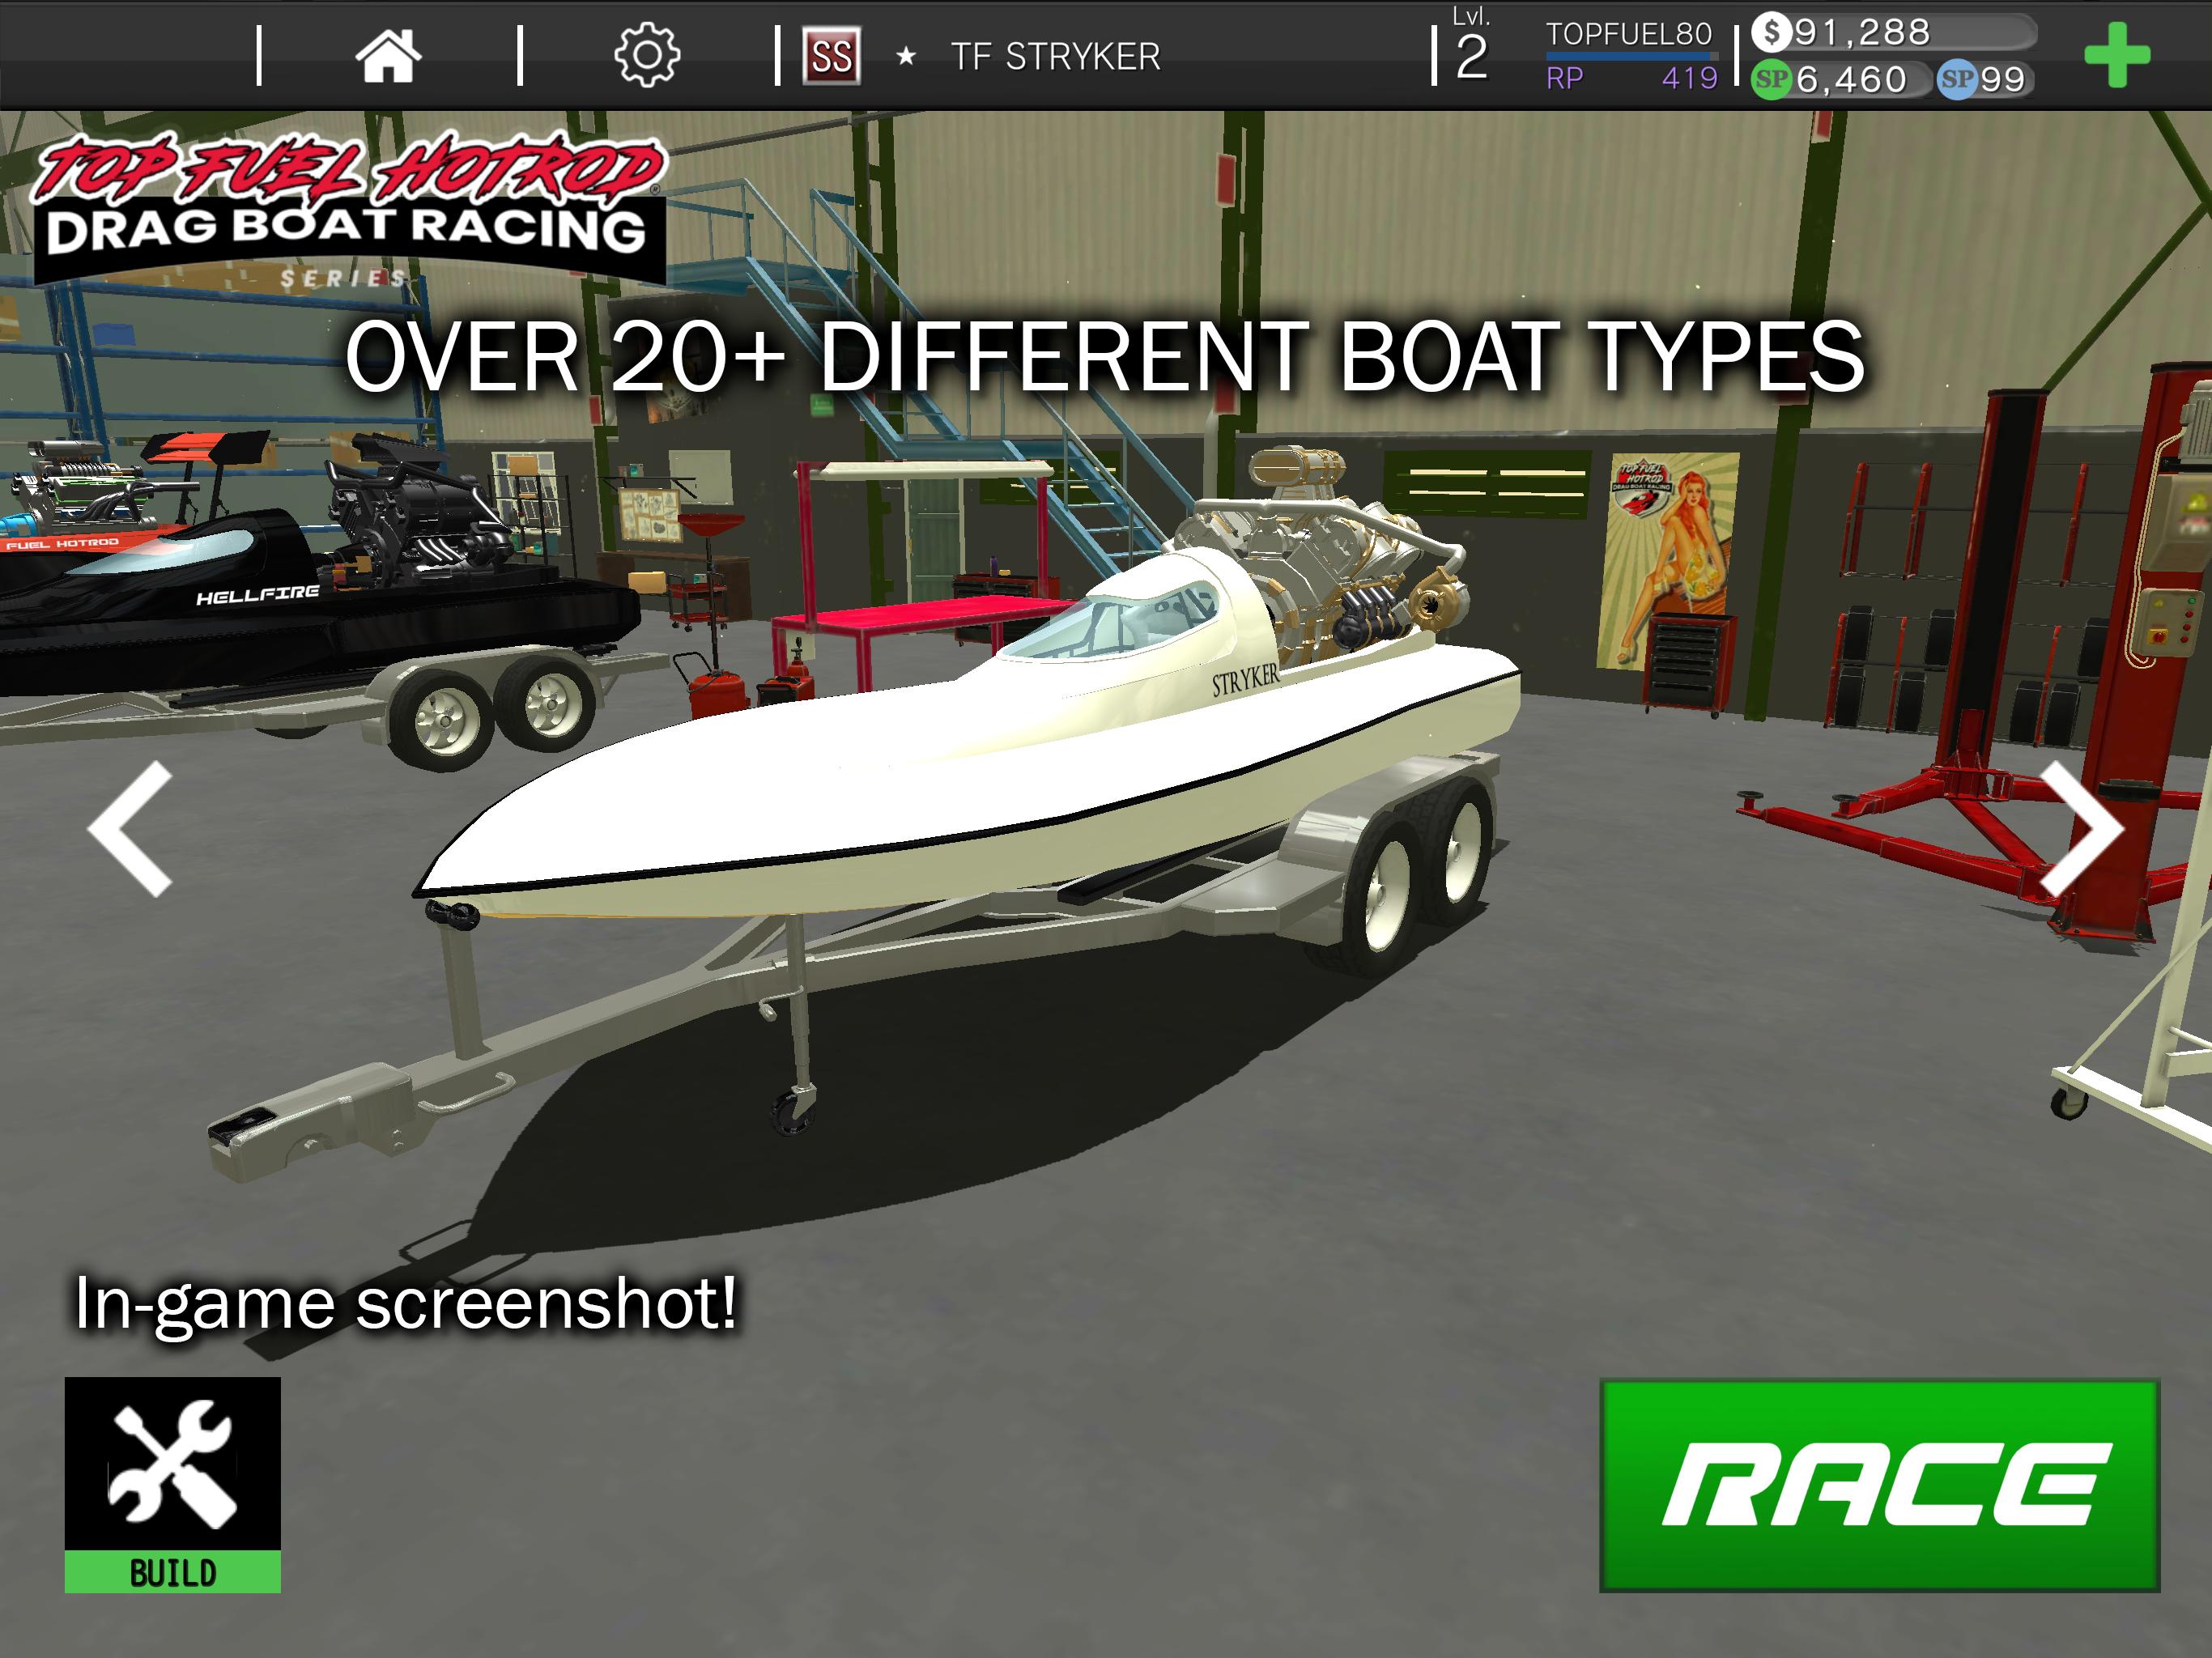 Top Fuel Hot Rod - Drag Boat Speed Racing Game 1.16 Screenshot 15